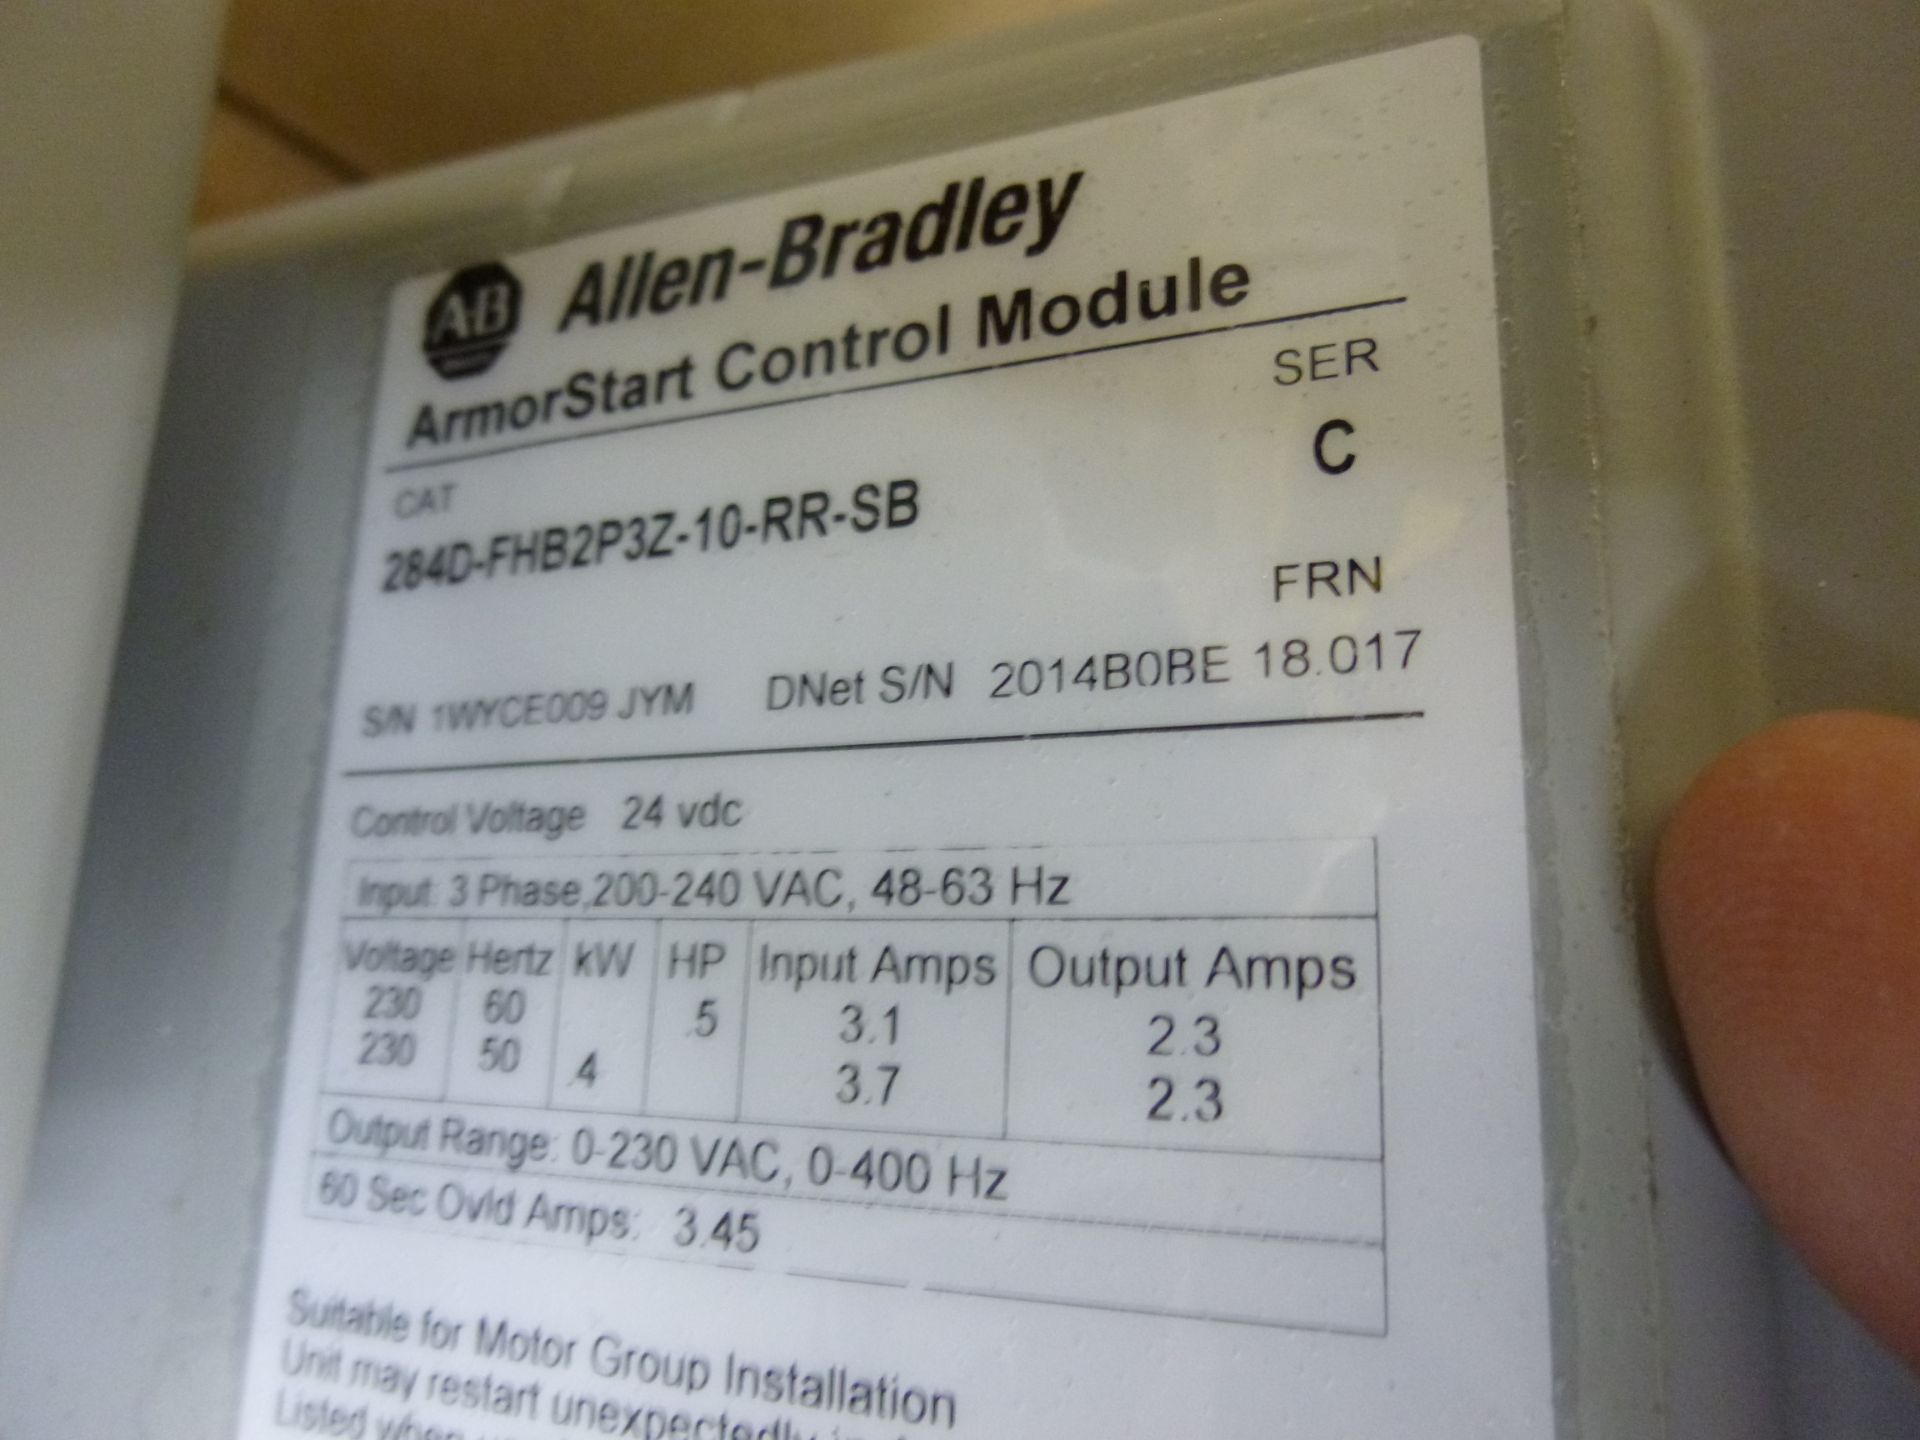 Allen Bradley ArmorStart Motor controller 284D drive and base, 284D-FHB2P3Z-10-RR-SB and 280D-FN- - Image 3 of 5